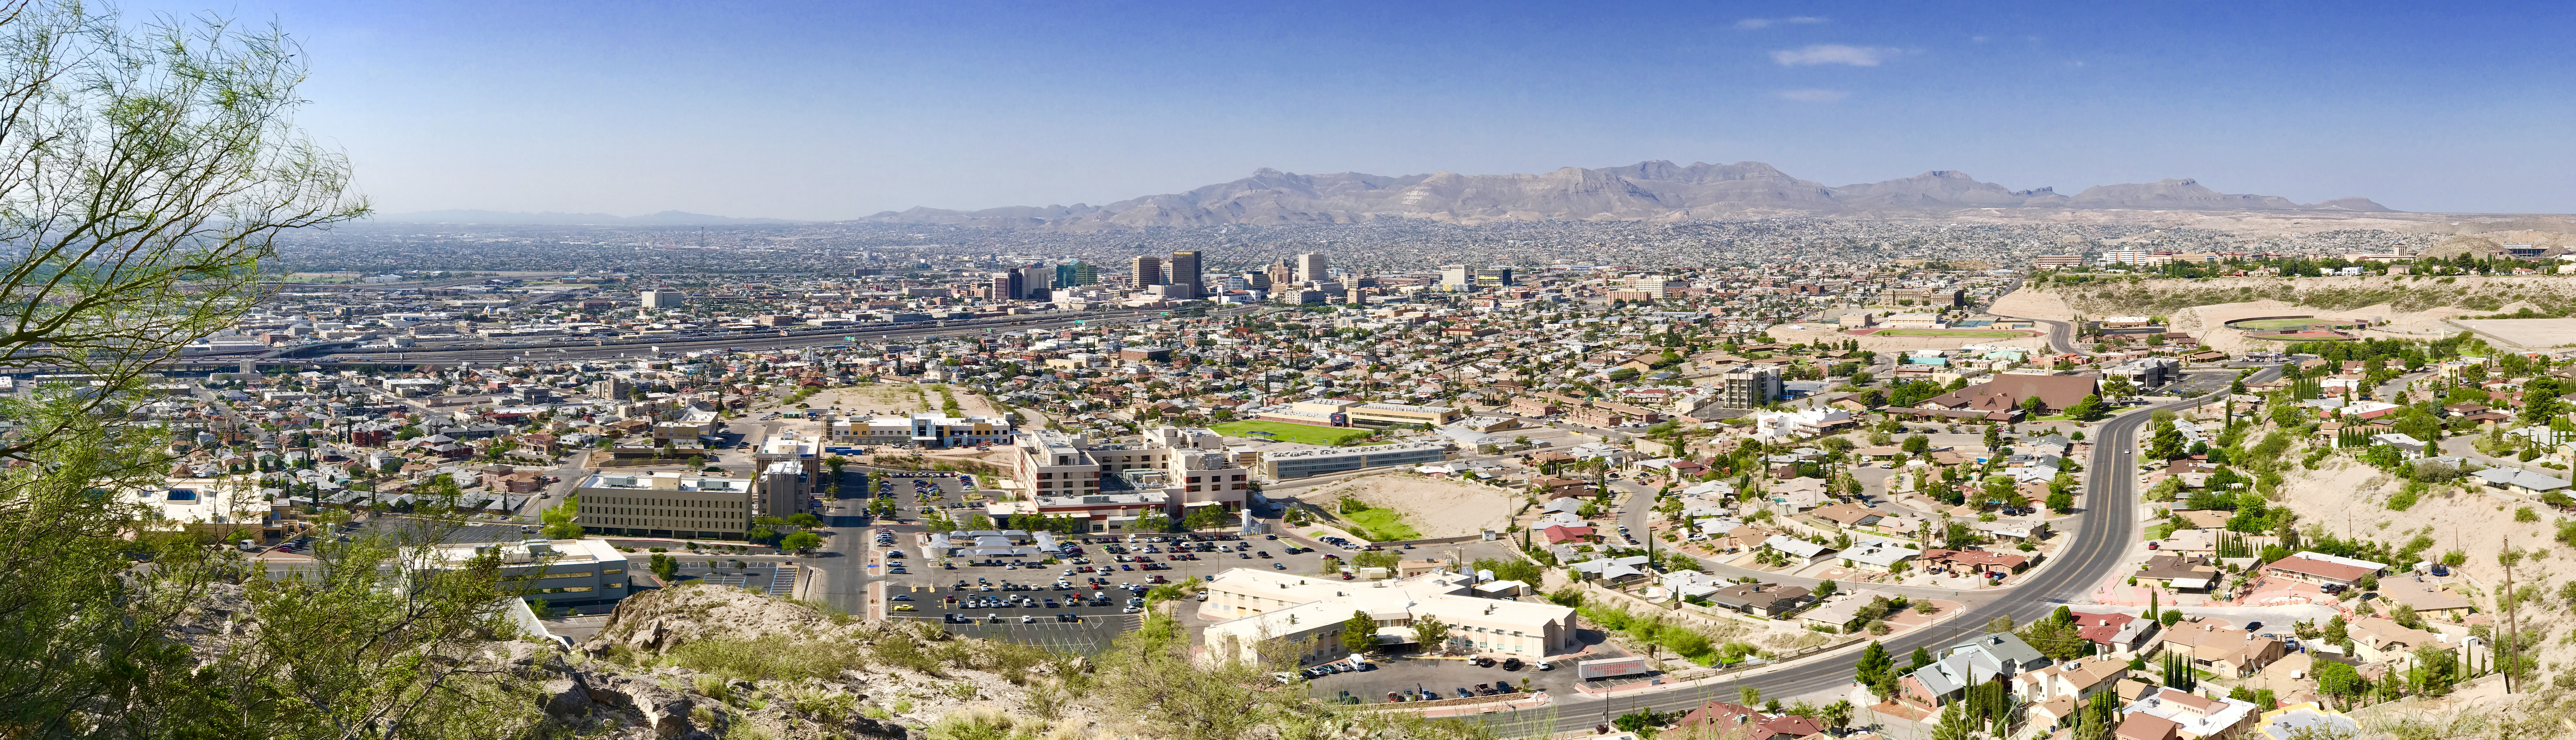 Panorama of El Paso, Texas